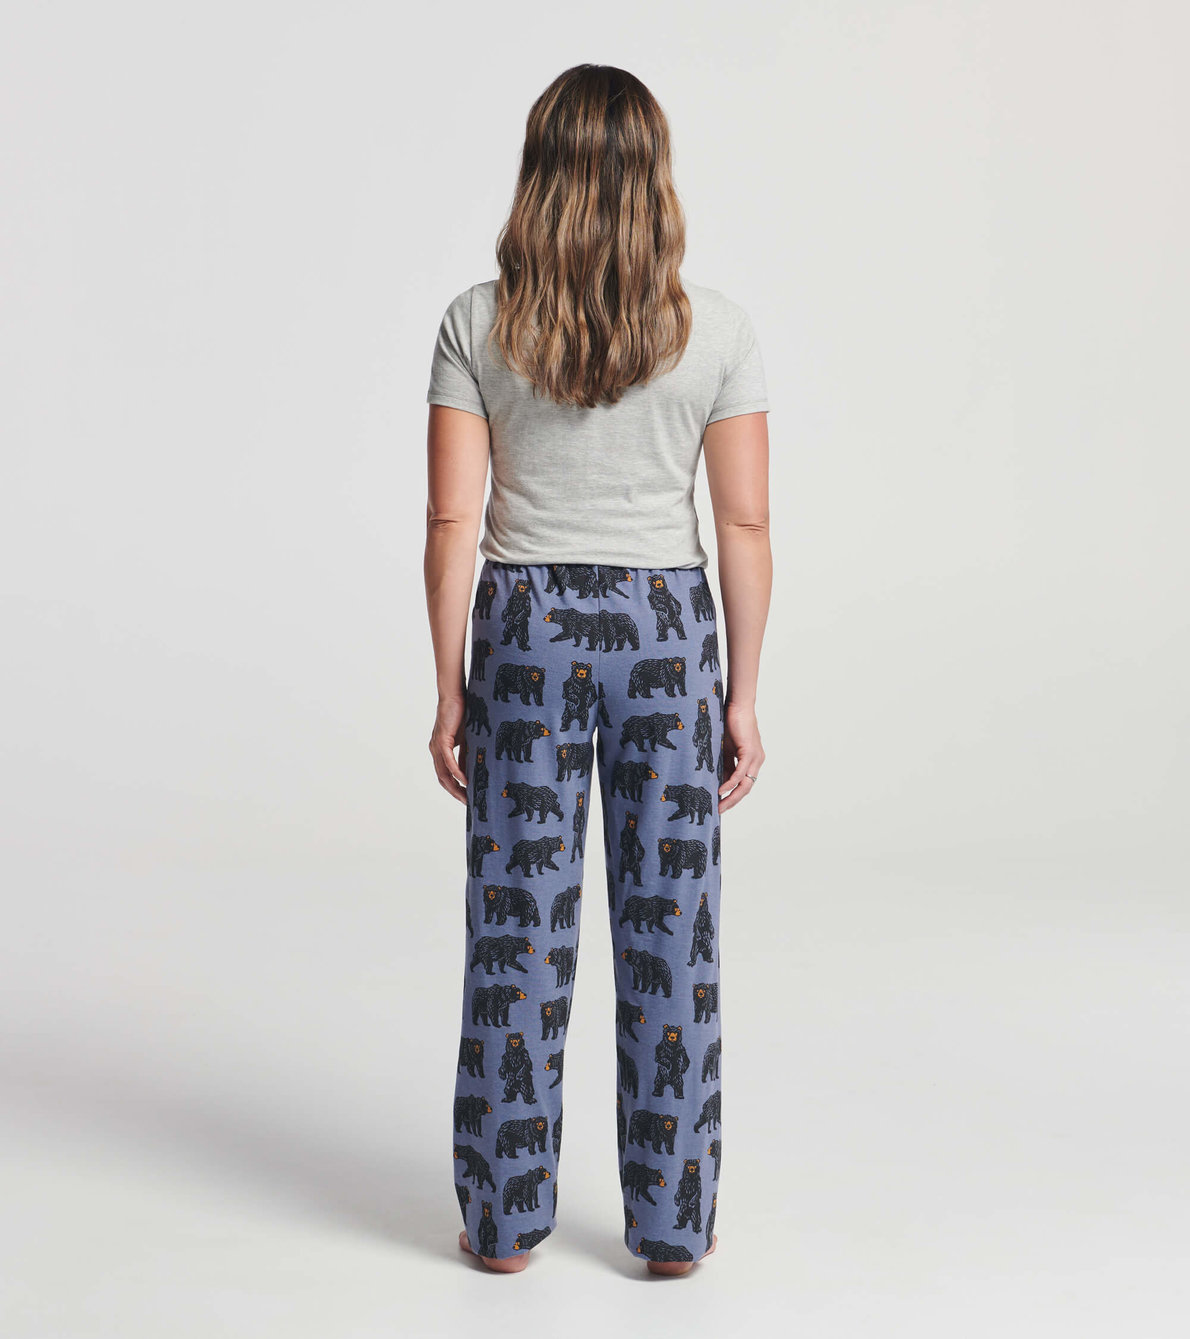 View larger image of Wild Bears Women's Jersey Pajama Pants